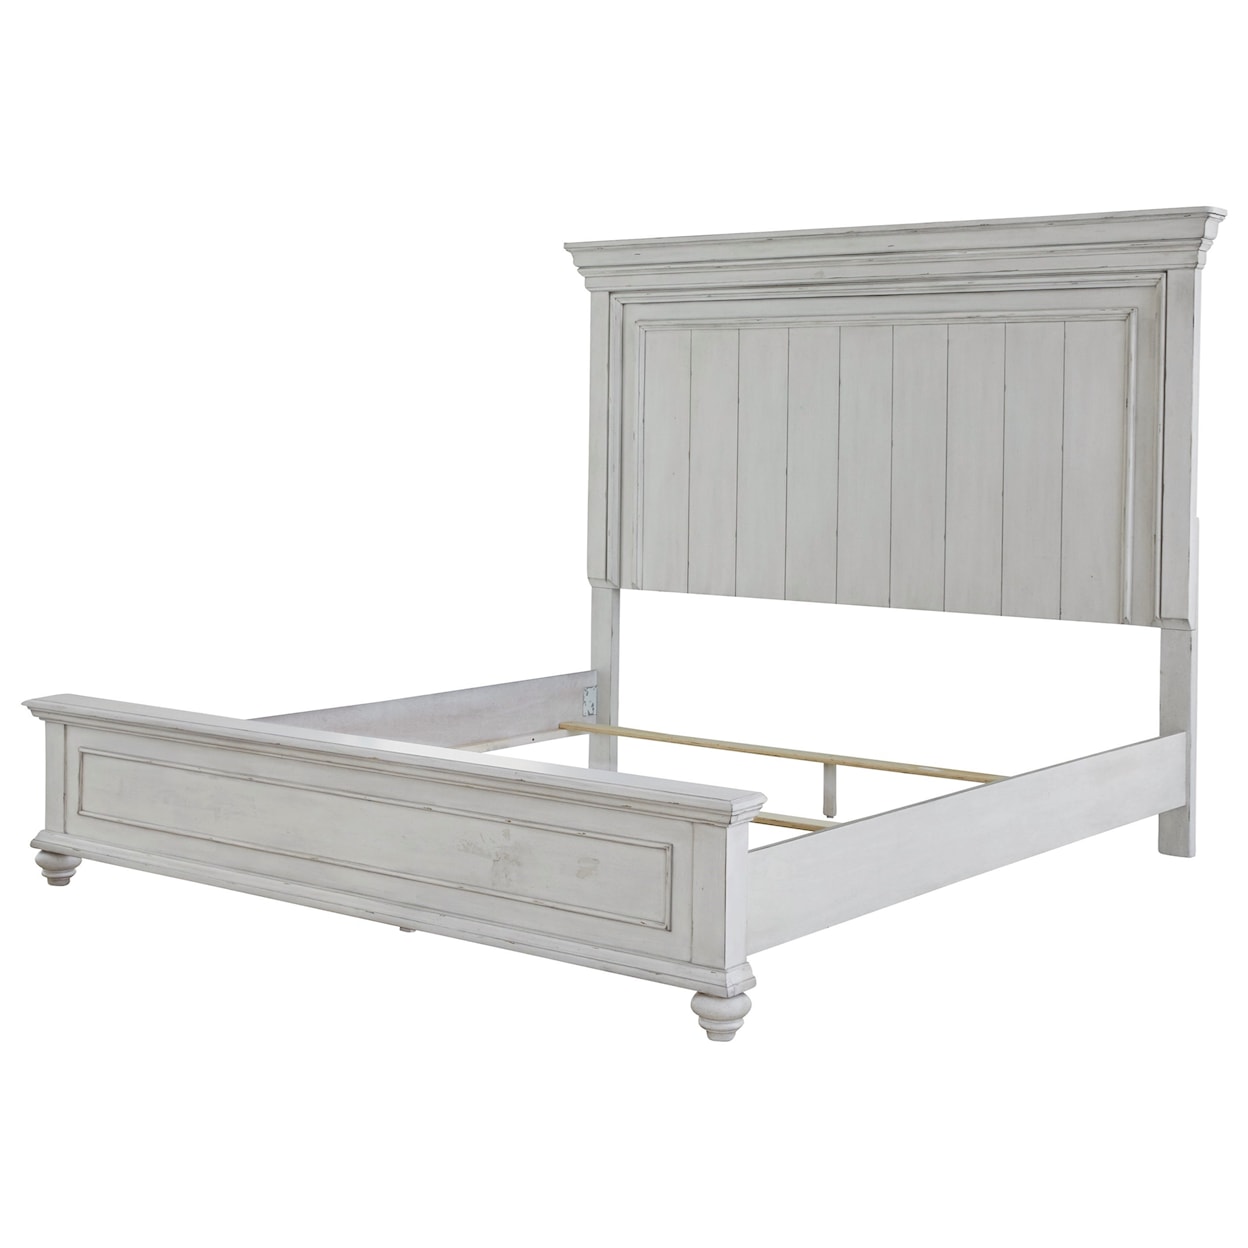 Ashley Furniture Benchcraft Kanwyn Queen Panel Bed